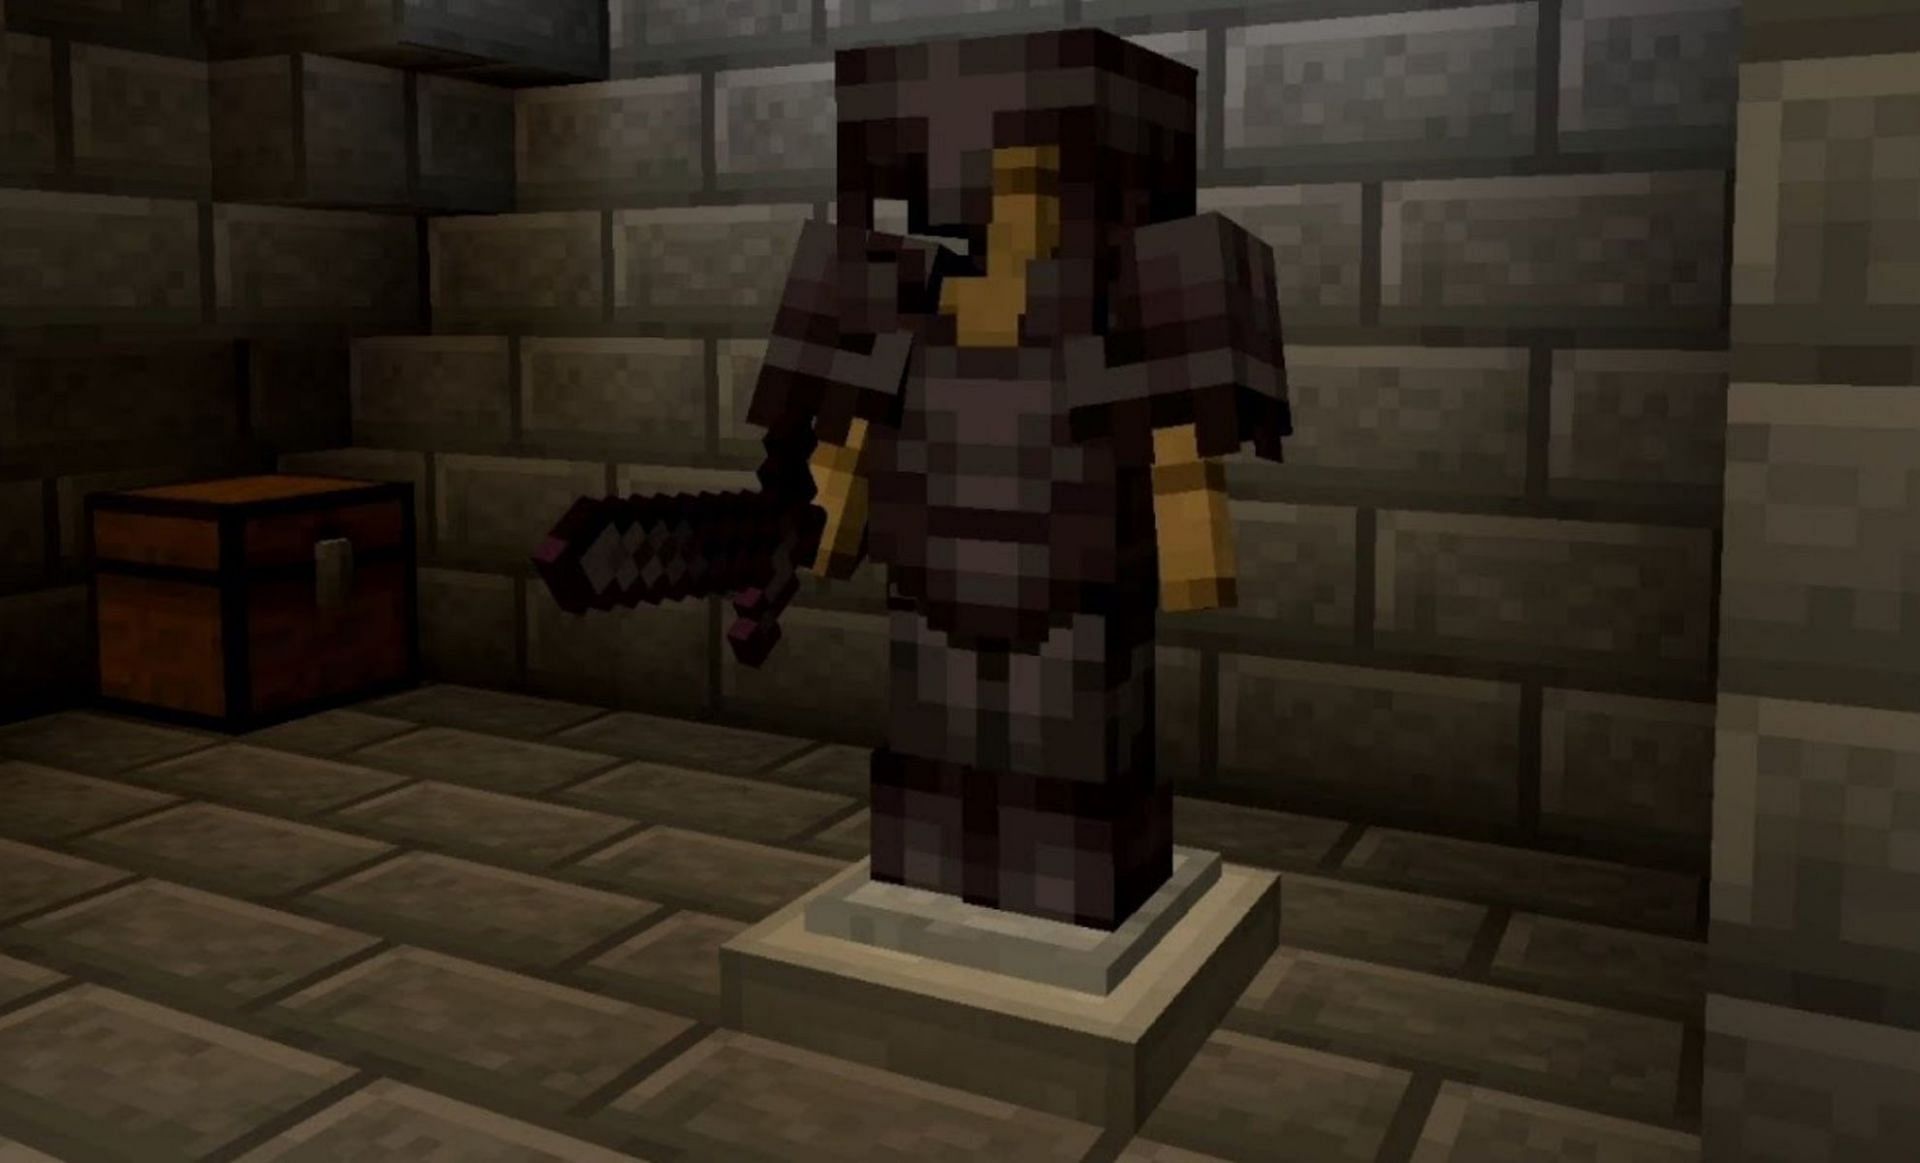 Netherite armor (Image via AserGaming on YouTube)